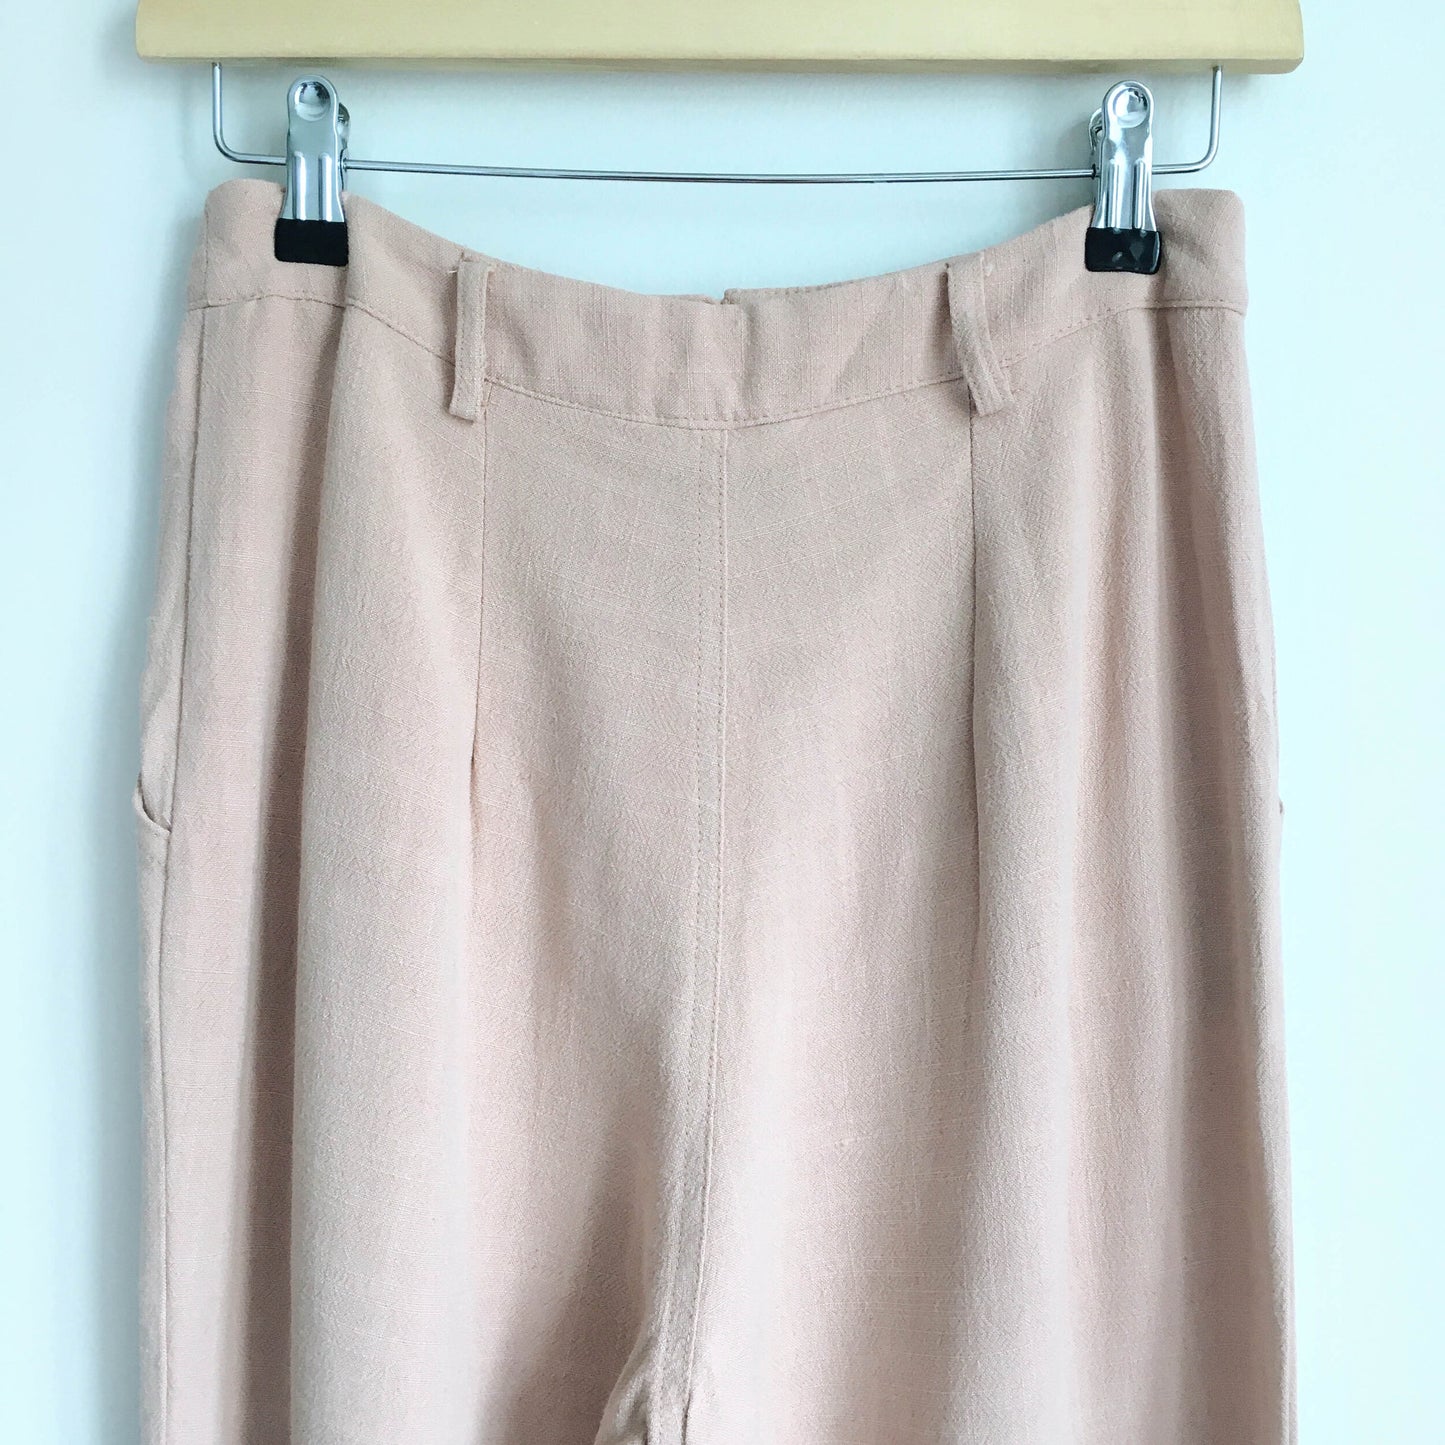 NWT Sans Souci high waist button pleat front pant - size Small